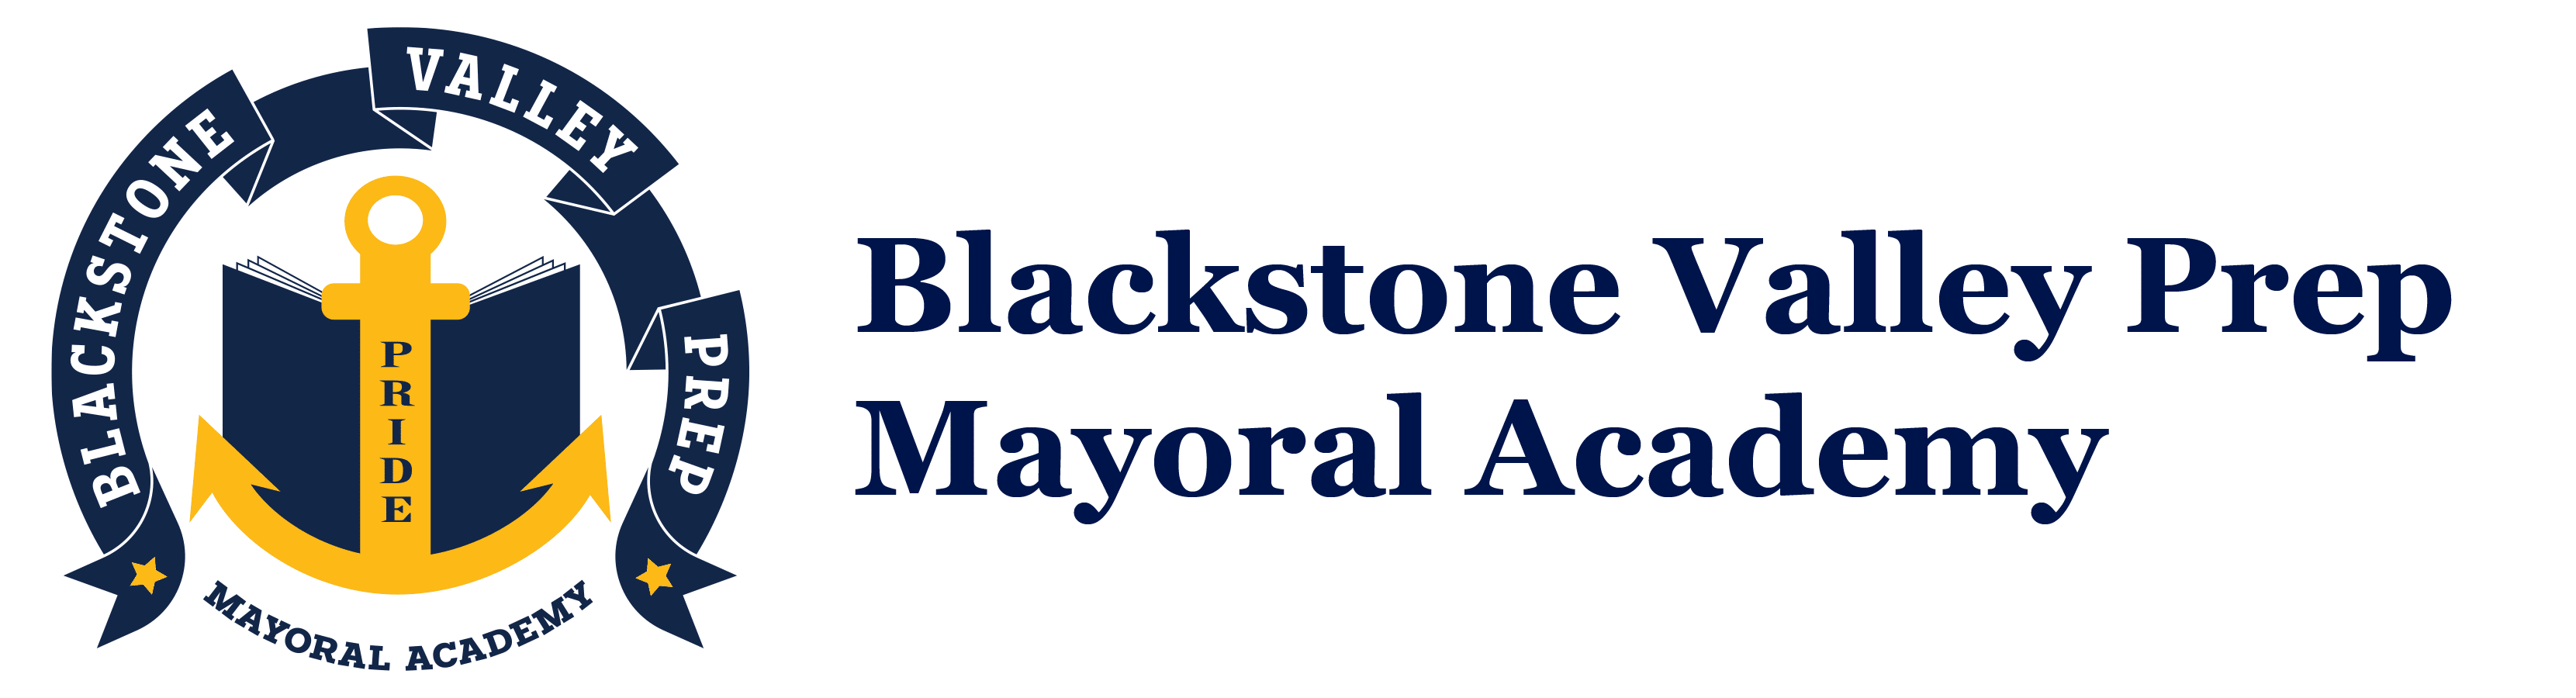 Blackstone Valley Prep Mayoral Academy | Rhode Island Charter School